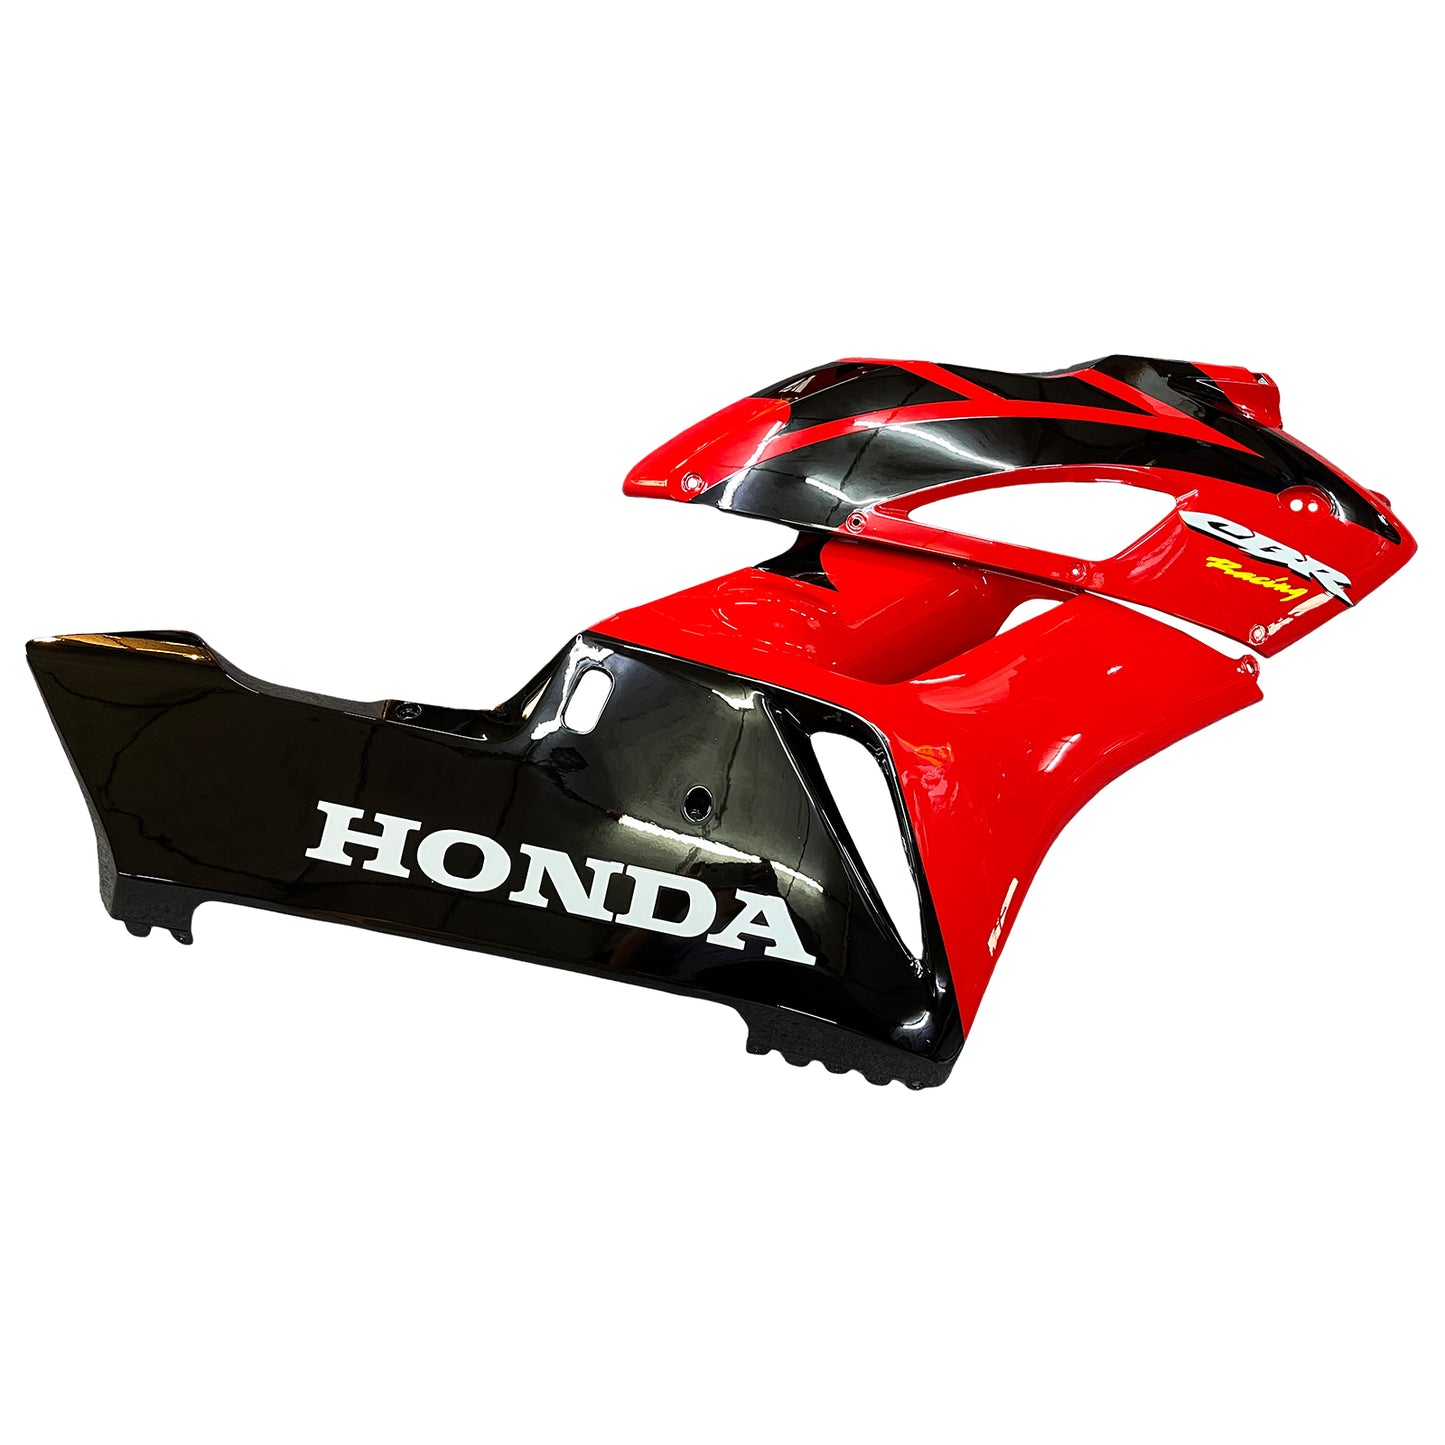 2004-2005 Honda CBR 1000 RR Amotopart Fairings Red Black CBR Racing Customs Fairing